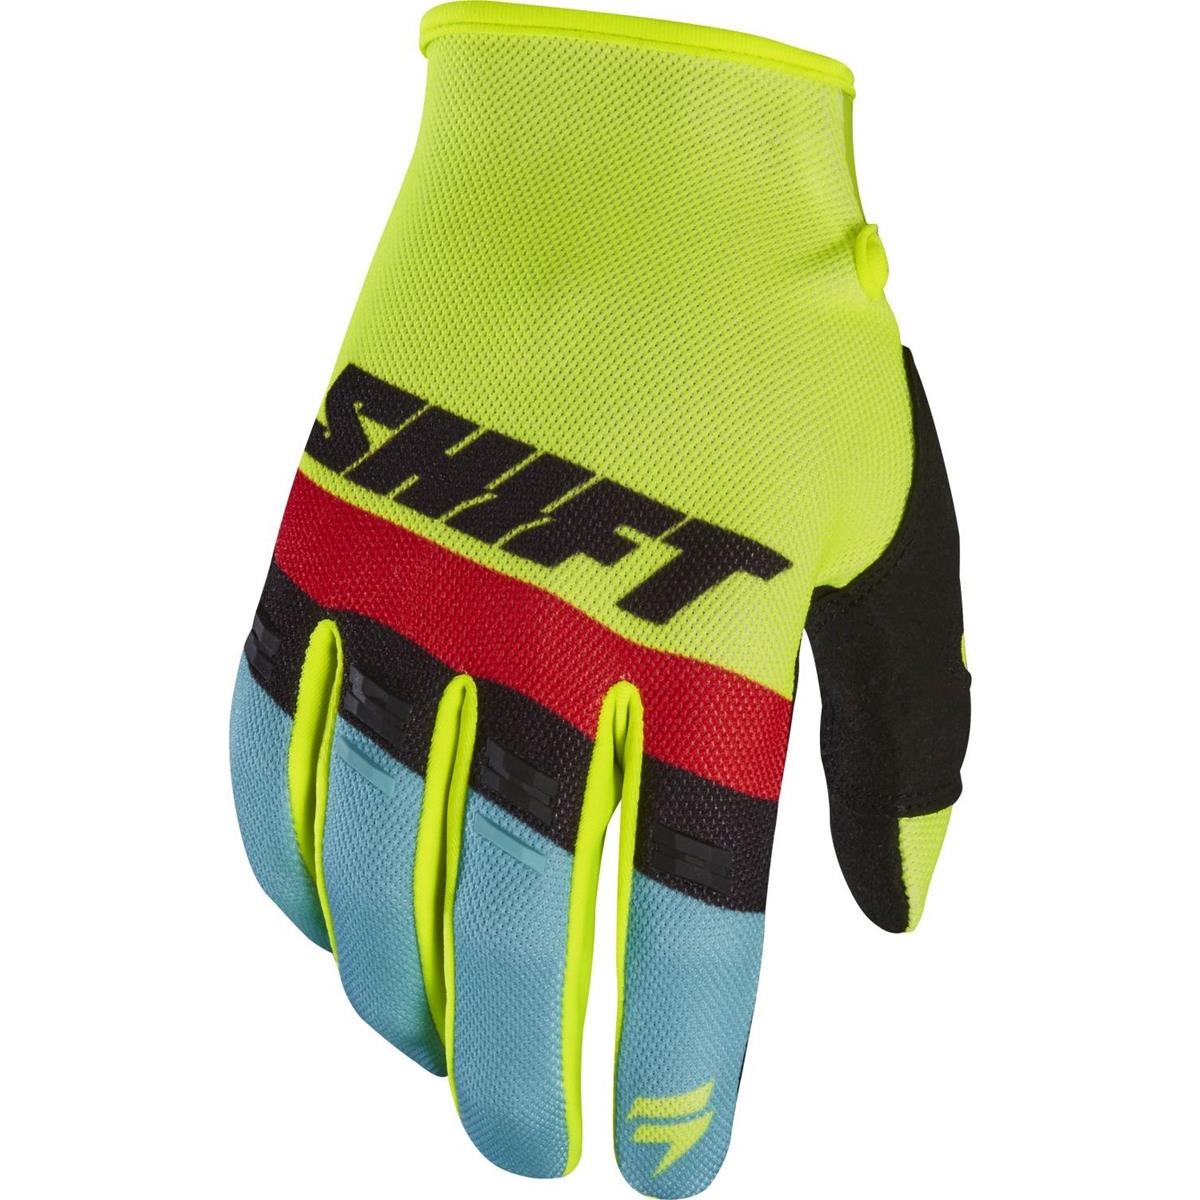 Shift Gloves Whit3 Air Flo Yellow - Tarmac